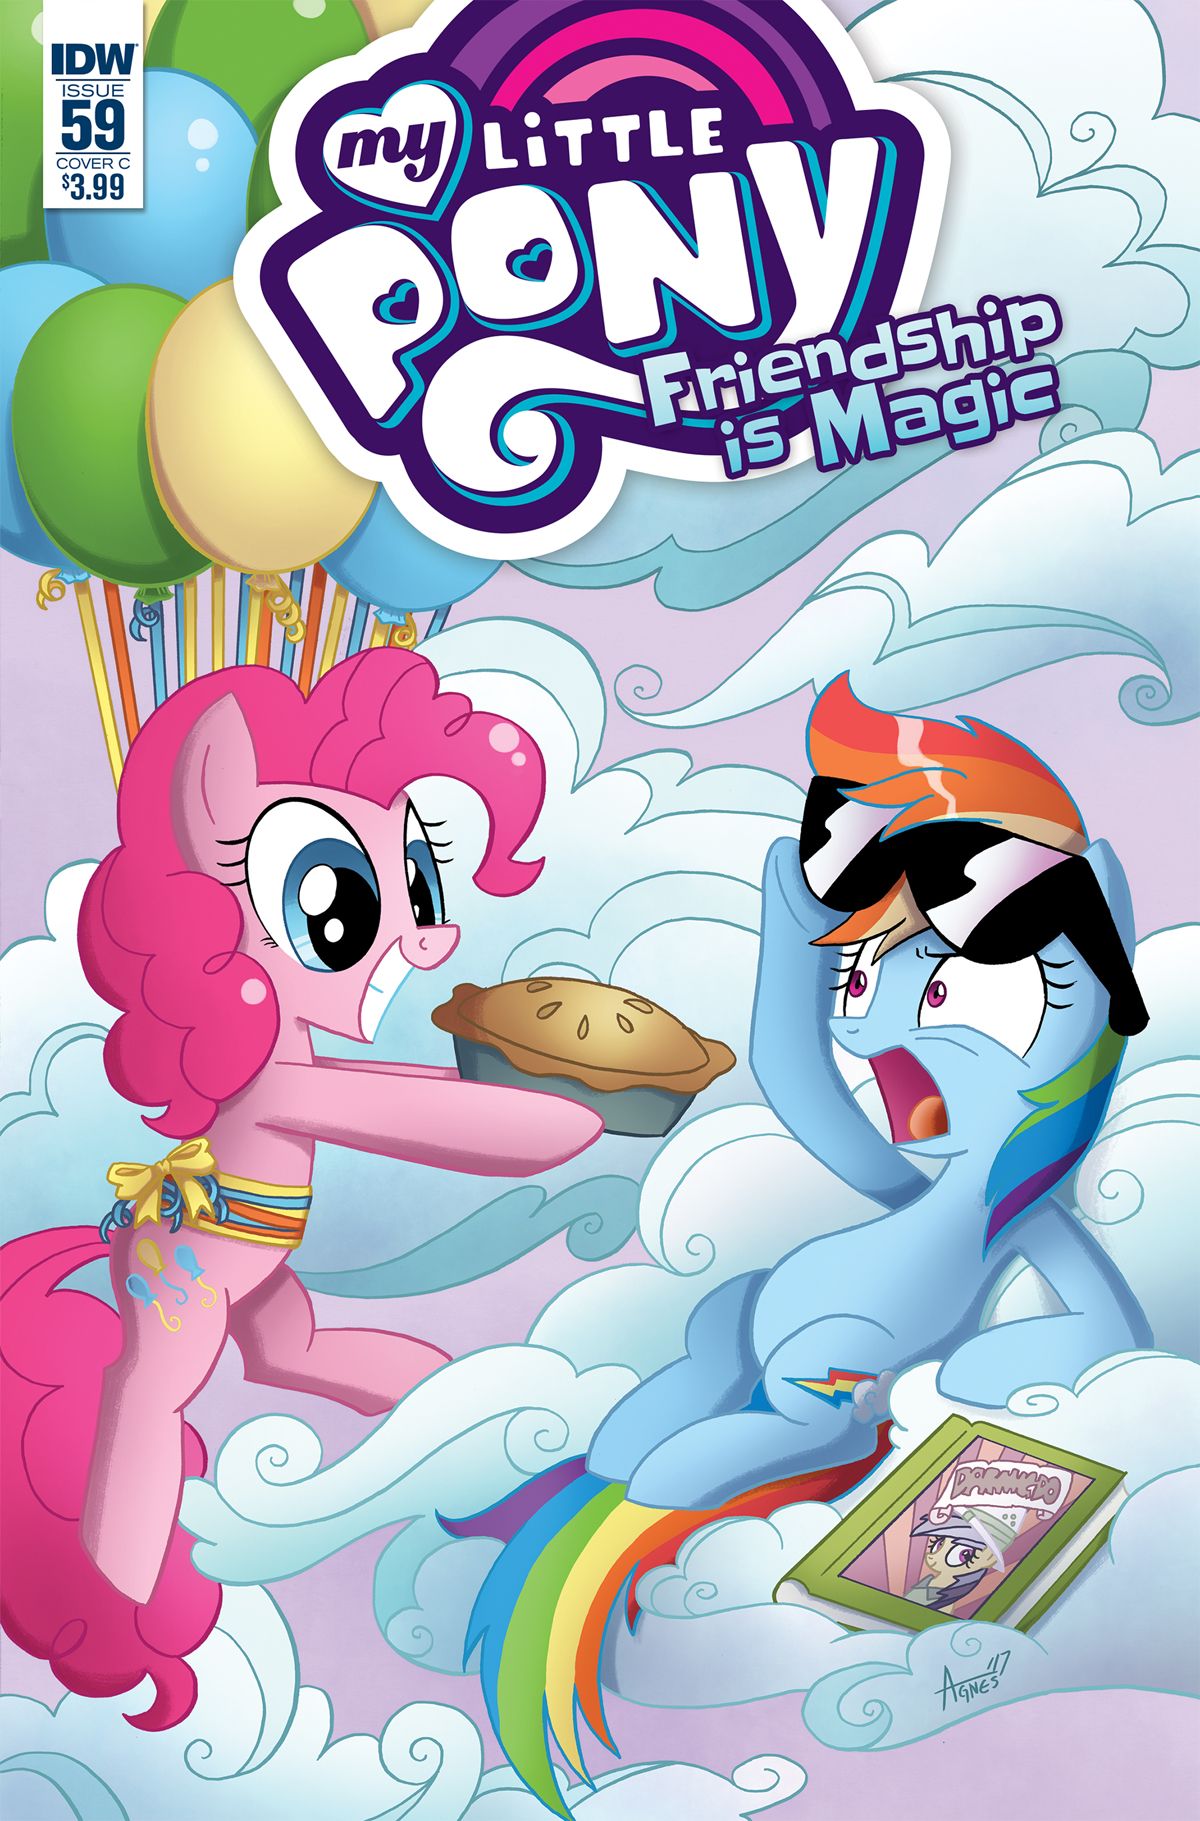 My Little Pony Friendship Is Magic #59 Comic